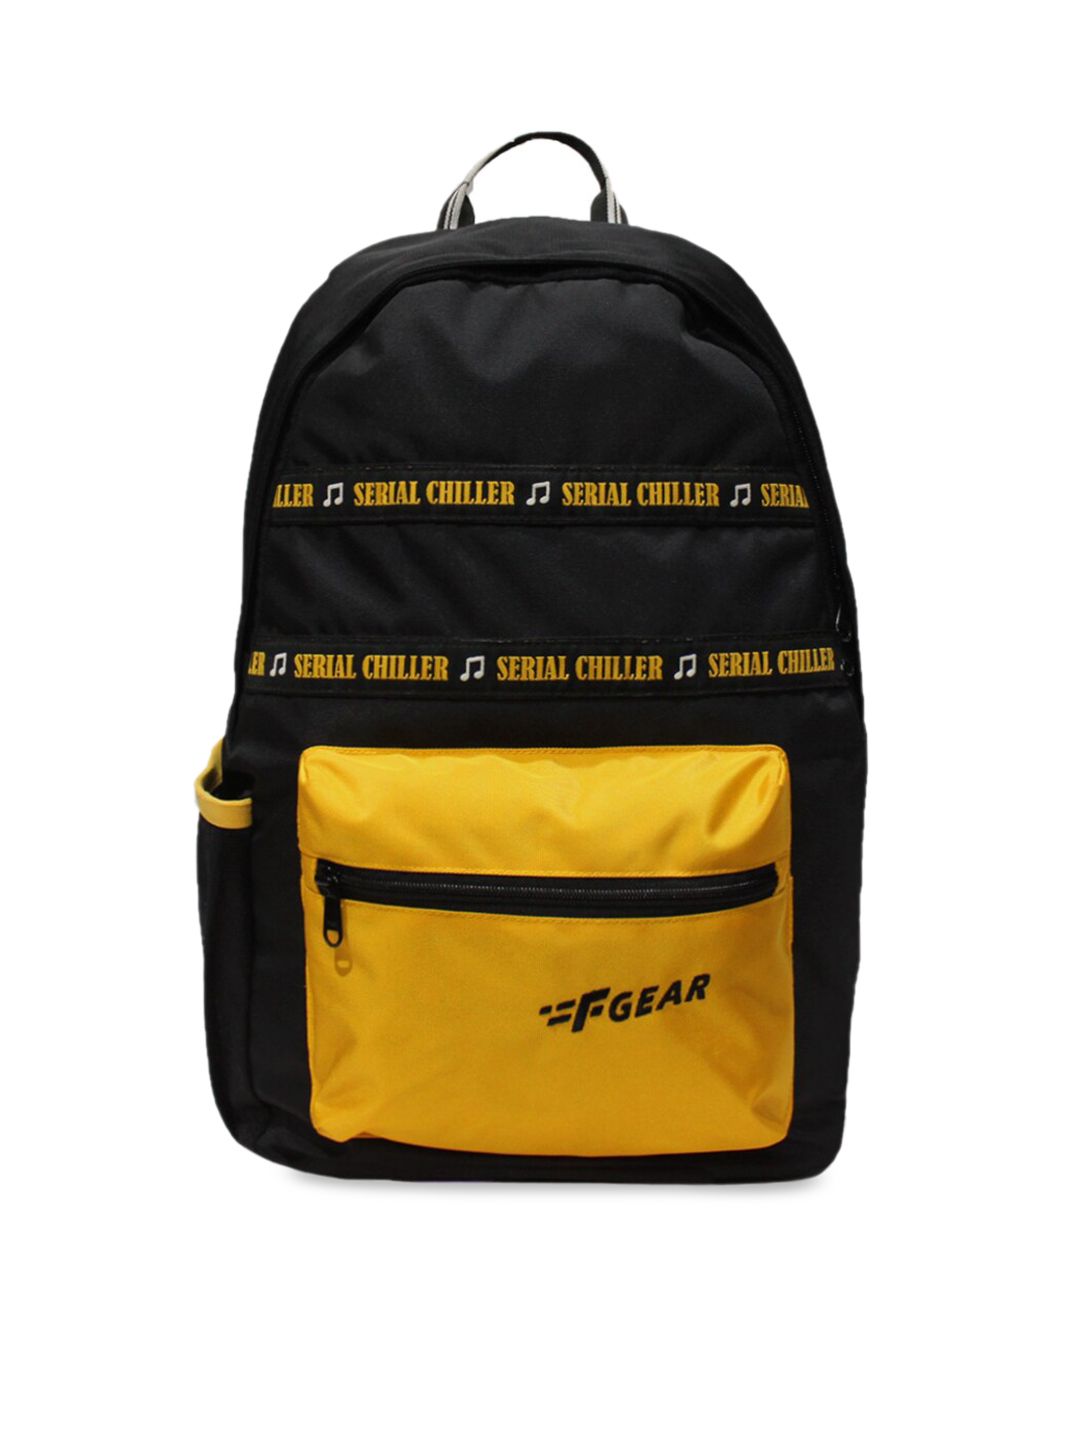 F Gear Unisex Black & Yellow Colourblocked Medium Backpack Price in India